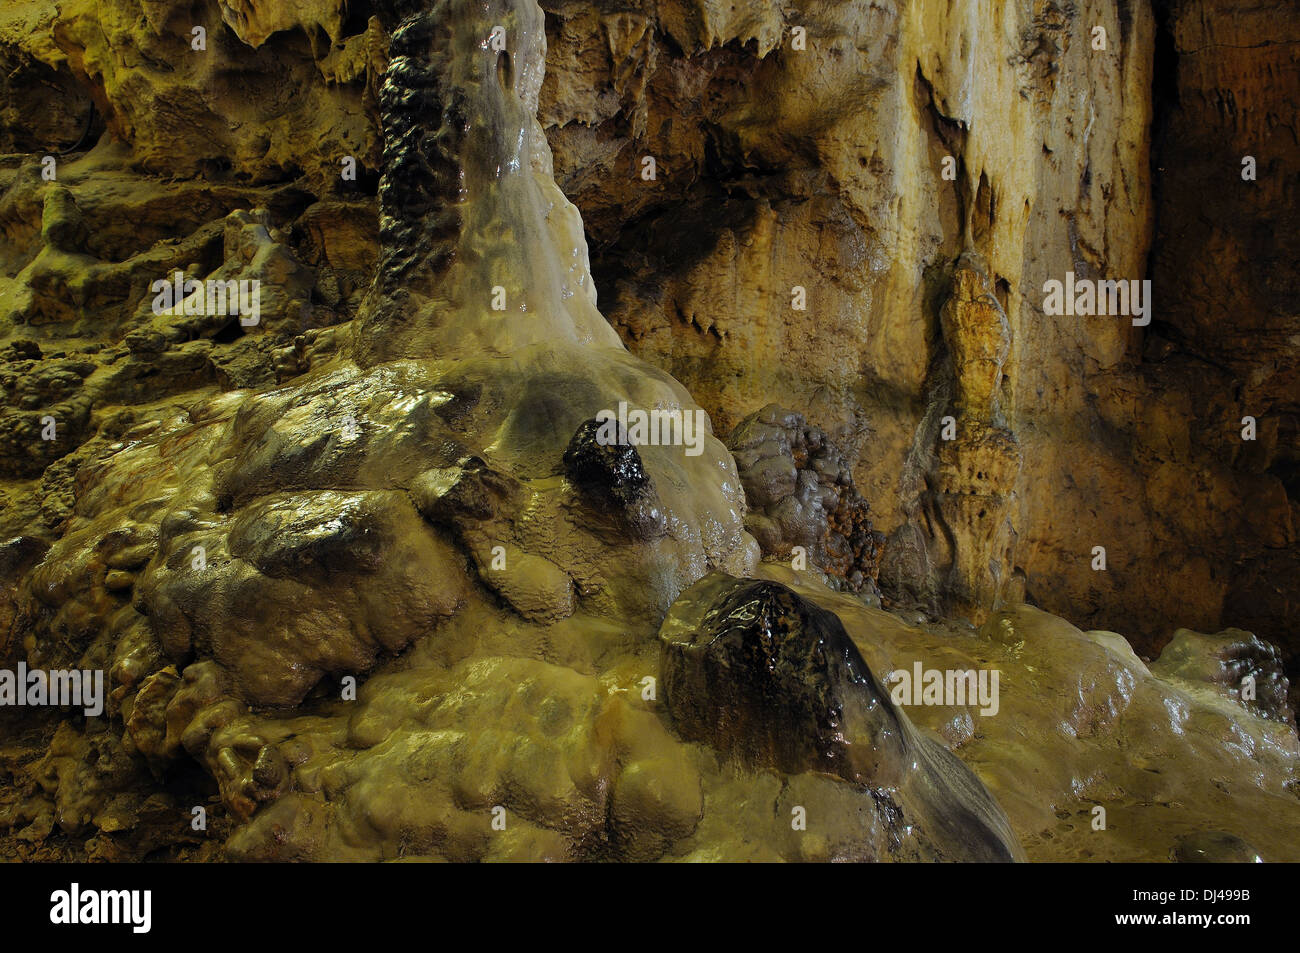 dripstone cave Stock Photo